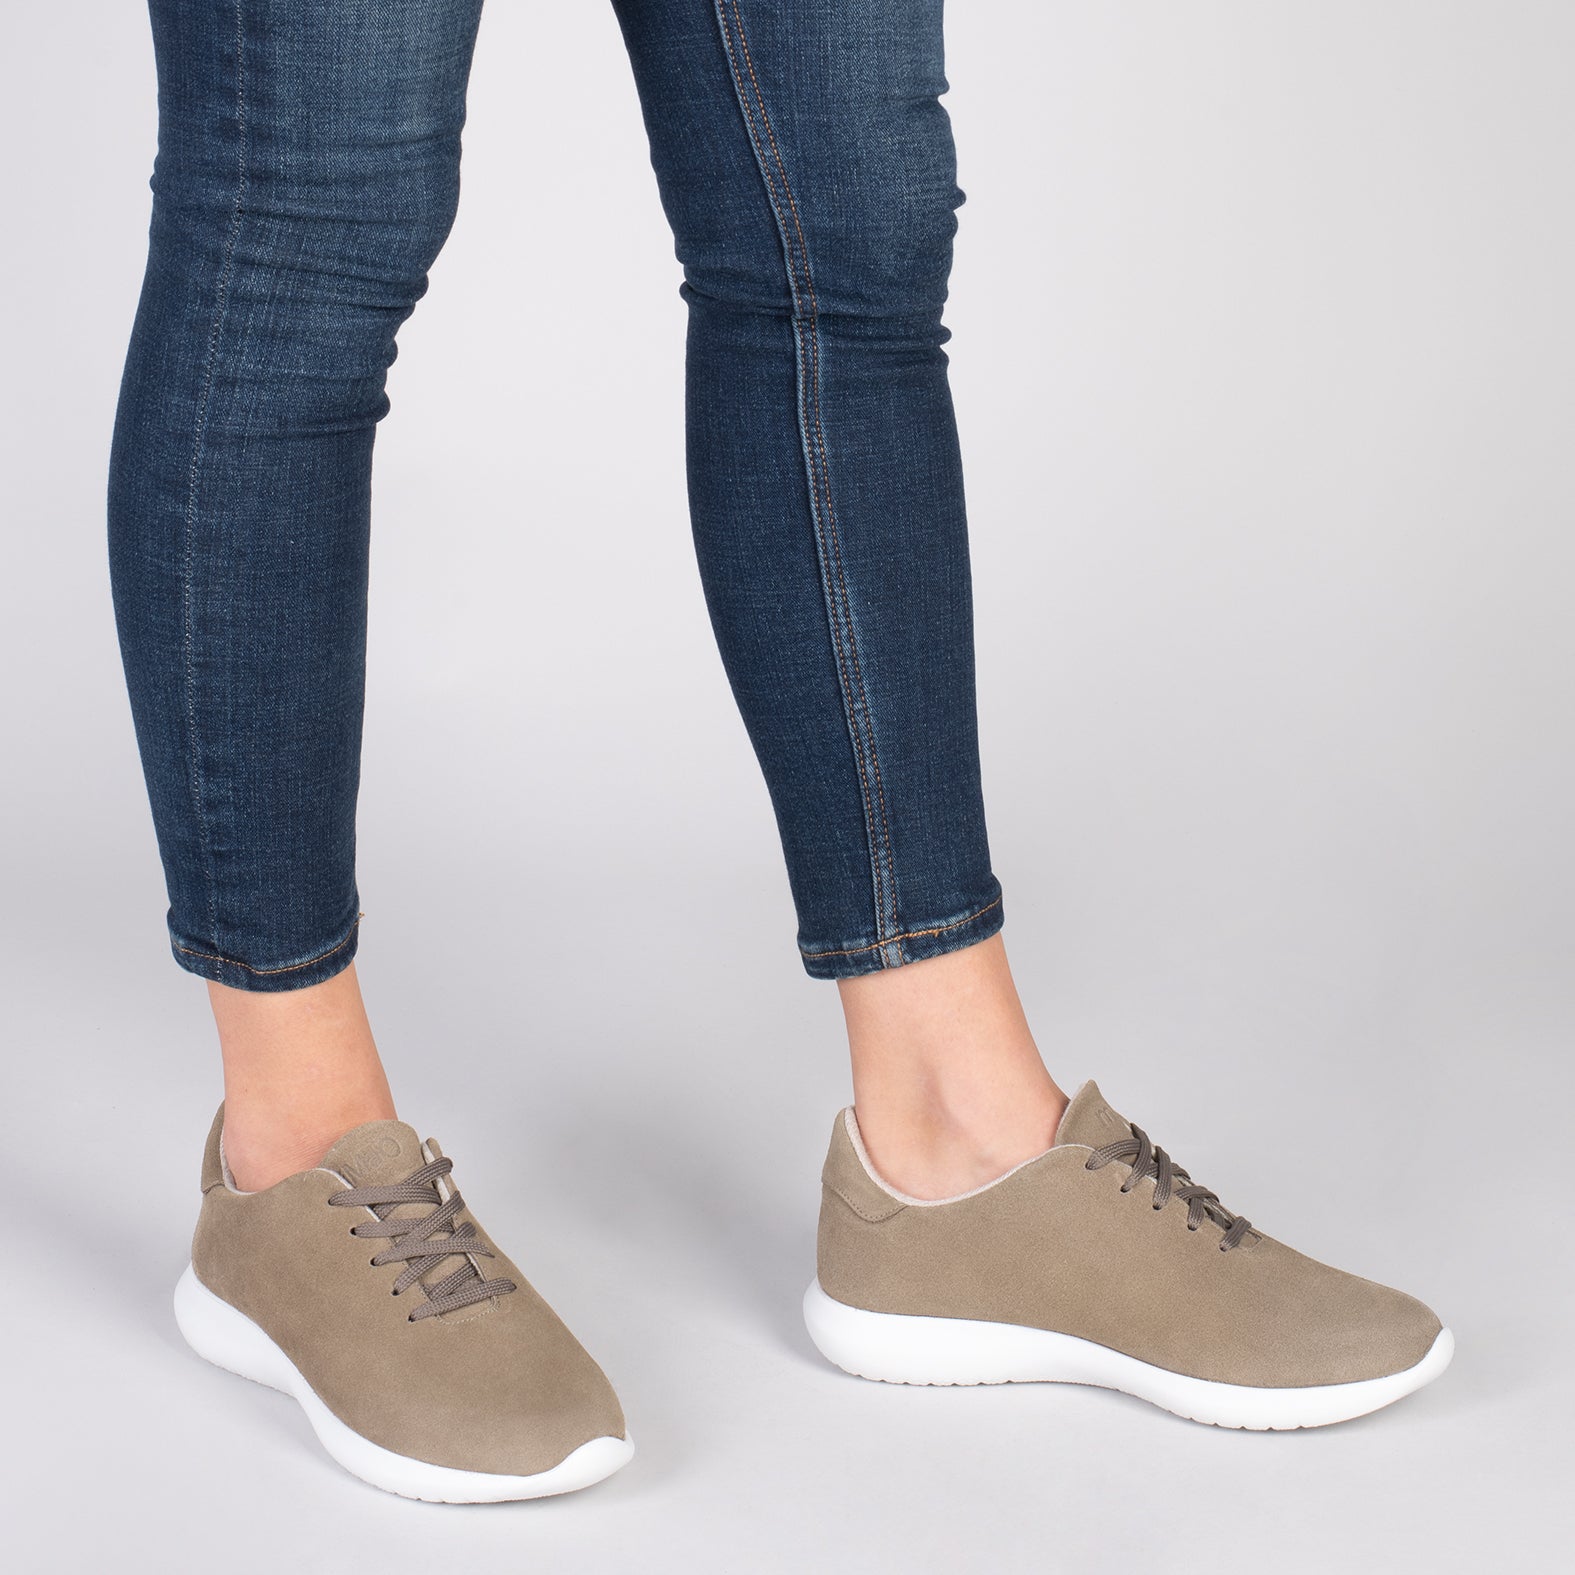 WALK – TAUPE comfortable women’s sneakers